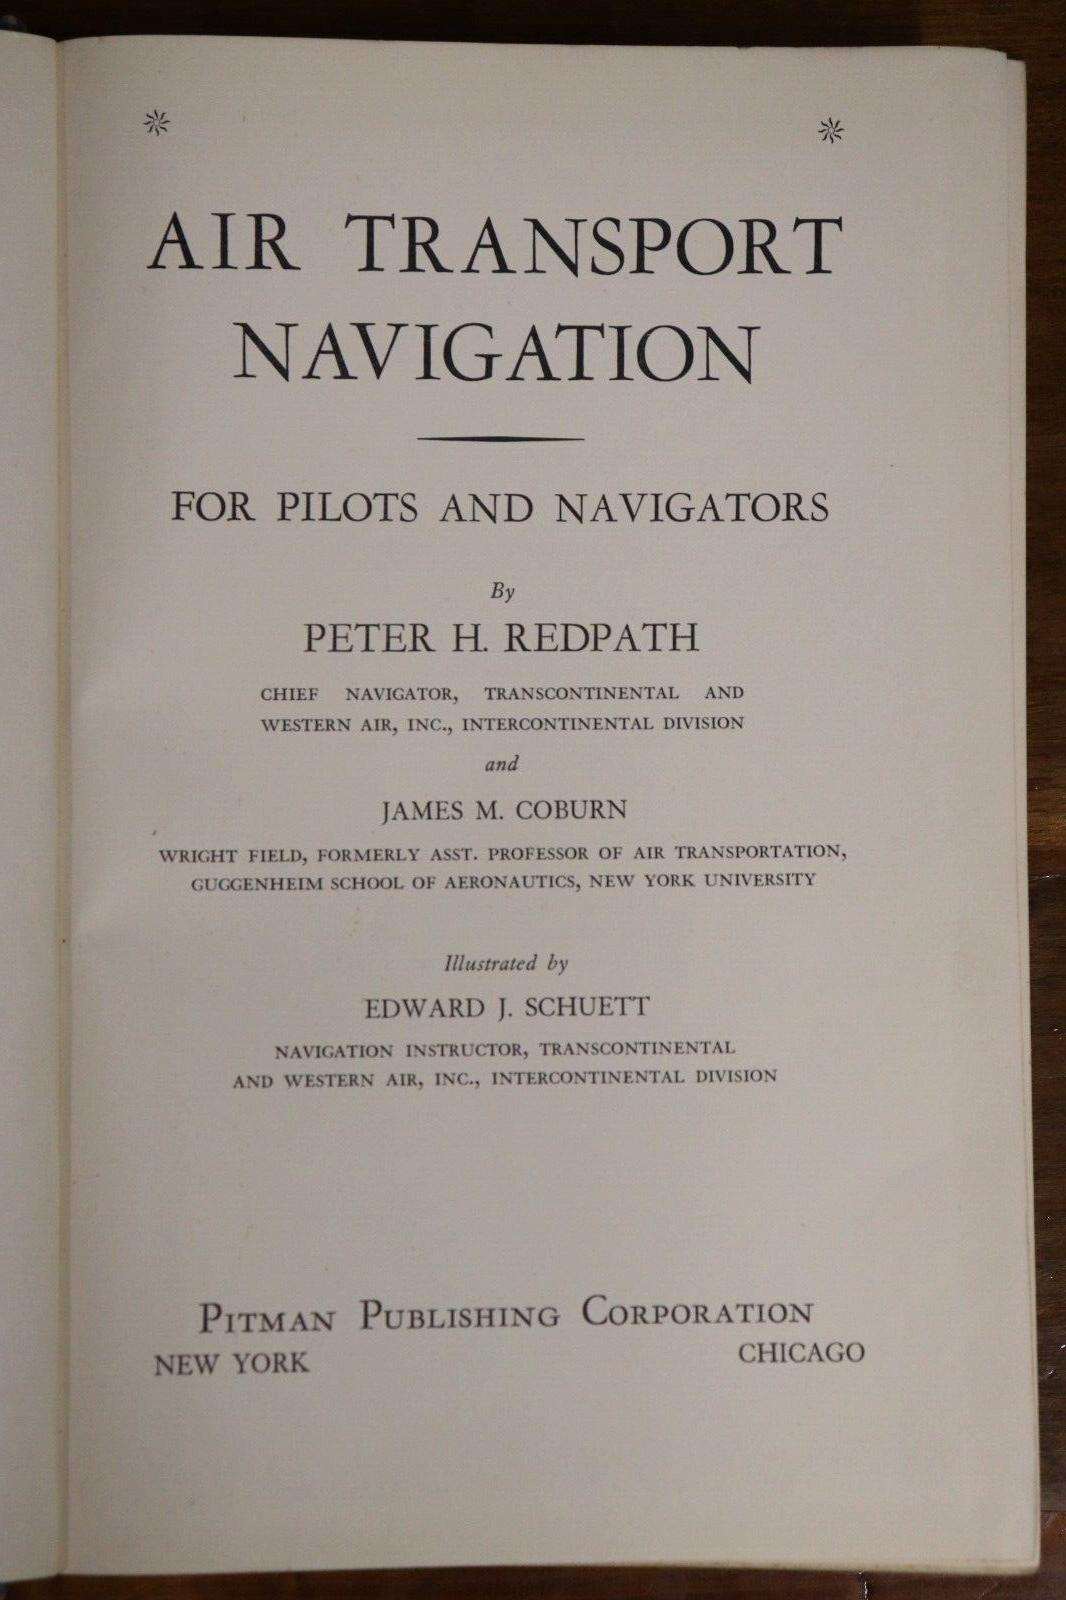 Air Transport Navigation by P Redpath - 1943 - Antique Pilot Navigation Book - 0